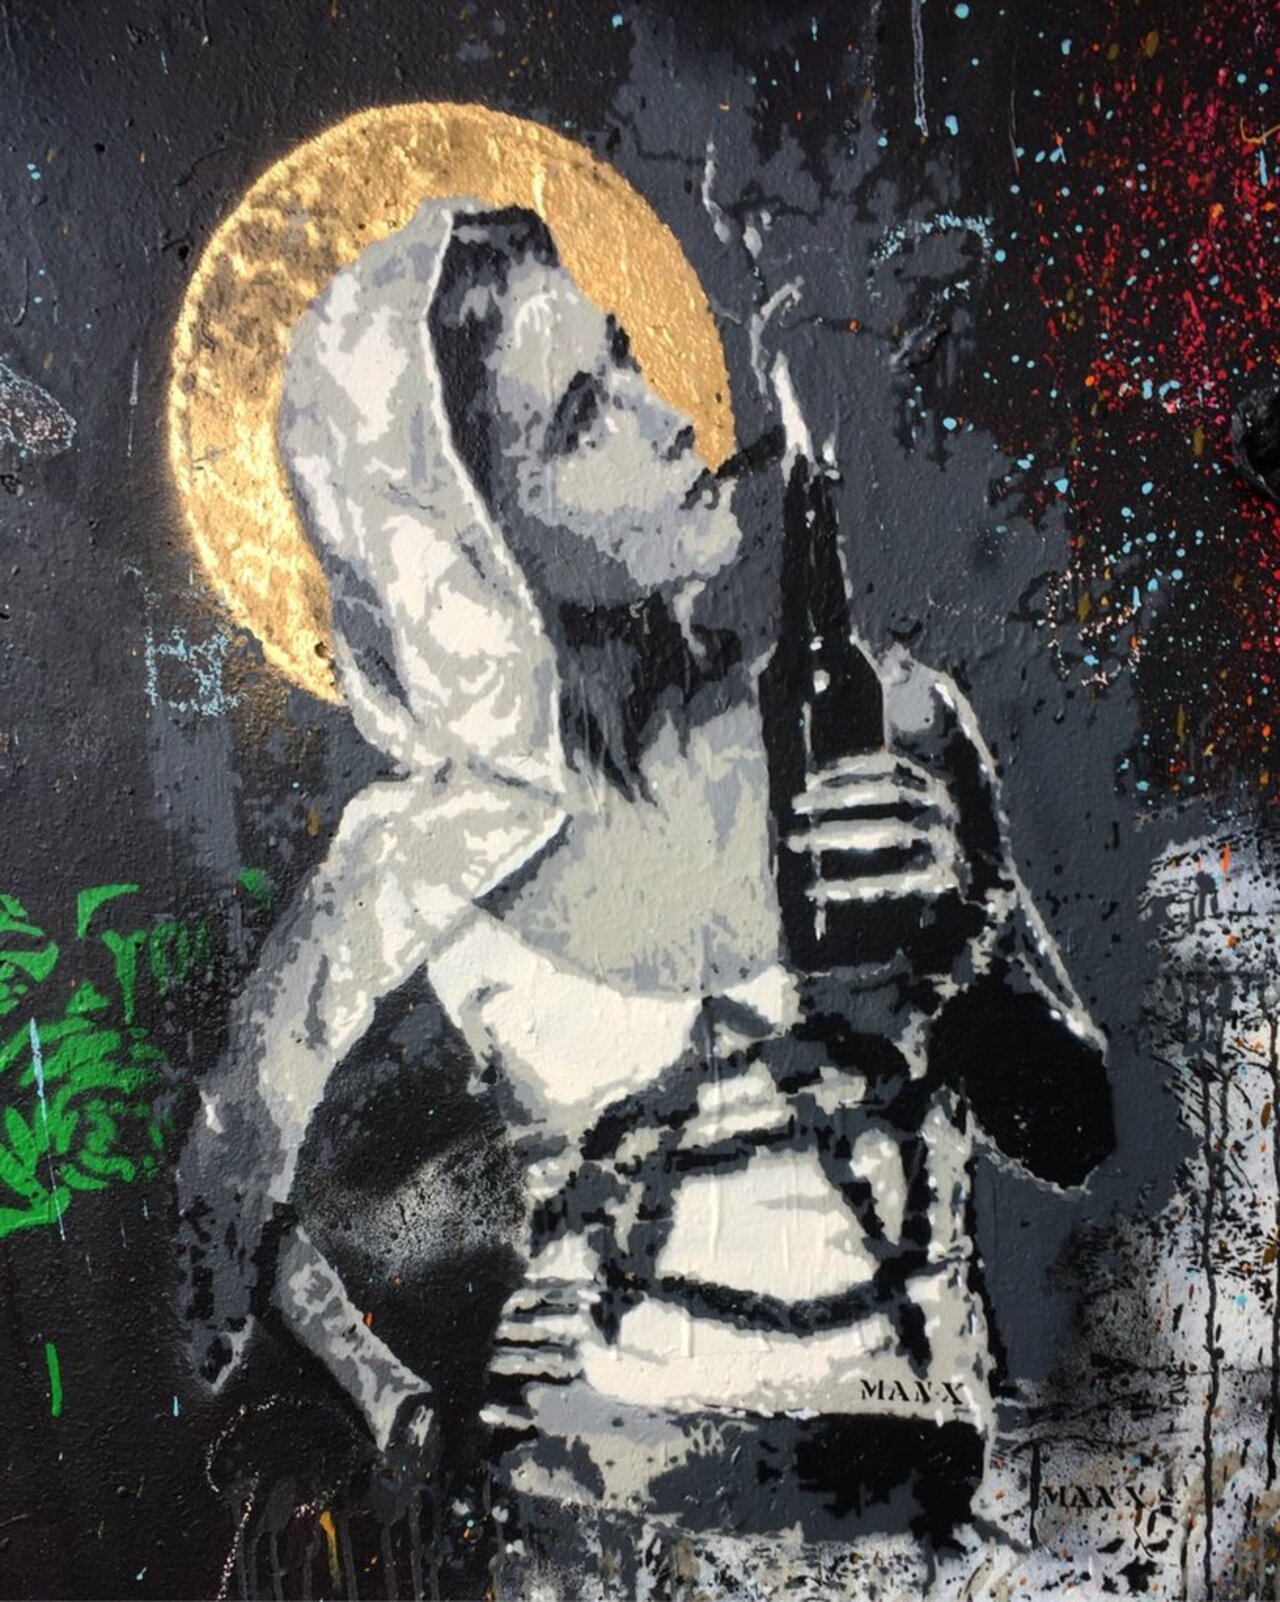 Anarchy in the Vatican by #manxmanx #anarchy #stencil #pochoir #streetart #graffiti #Spray #Bombing #urbanart #nirindastreet #GraffitiArt #lelavomatik #paris https://t.co/EX4hnDnceO